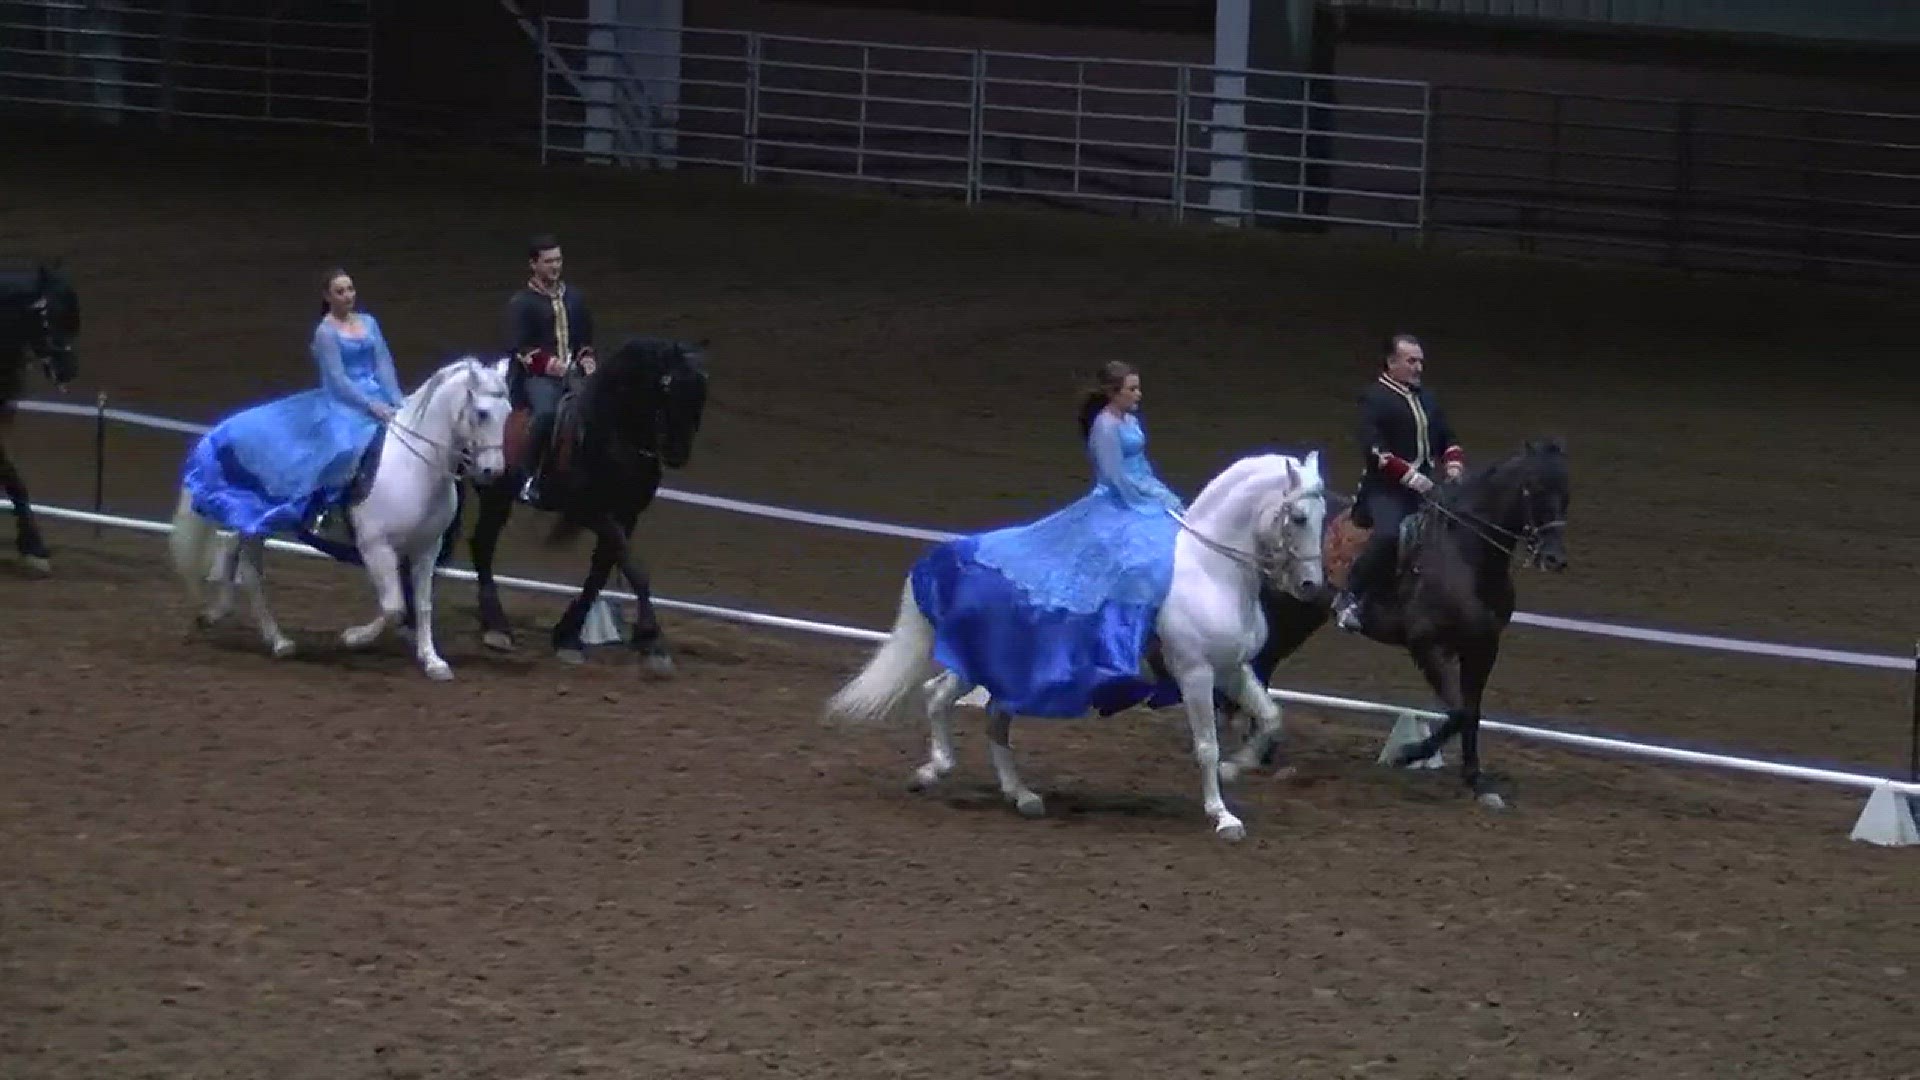 Gala of Royal Horses showcases European-syle horses here in San Angelo.